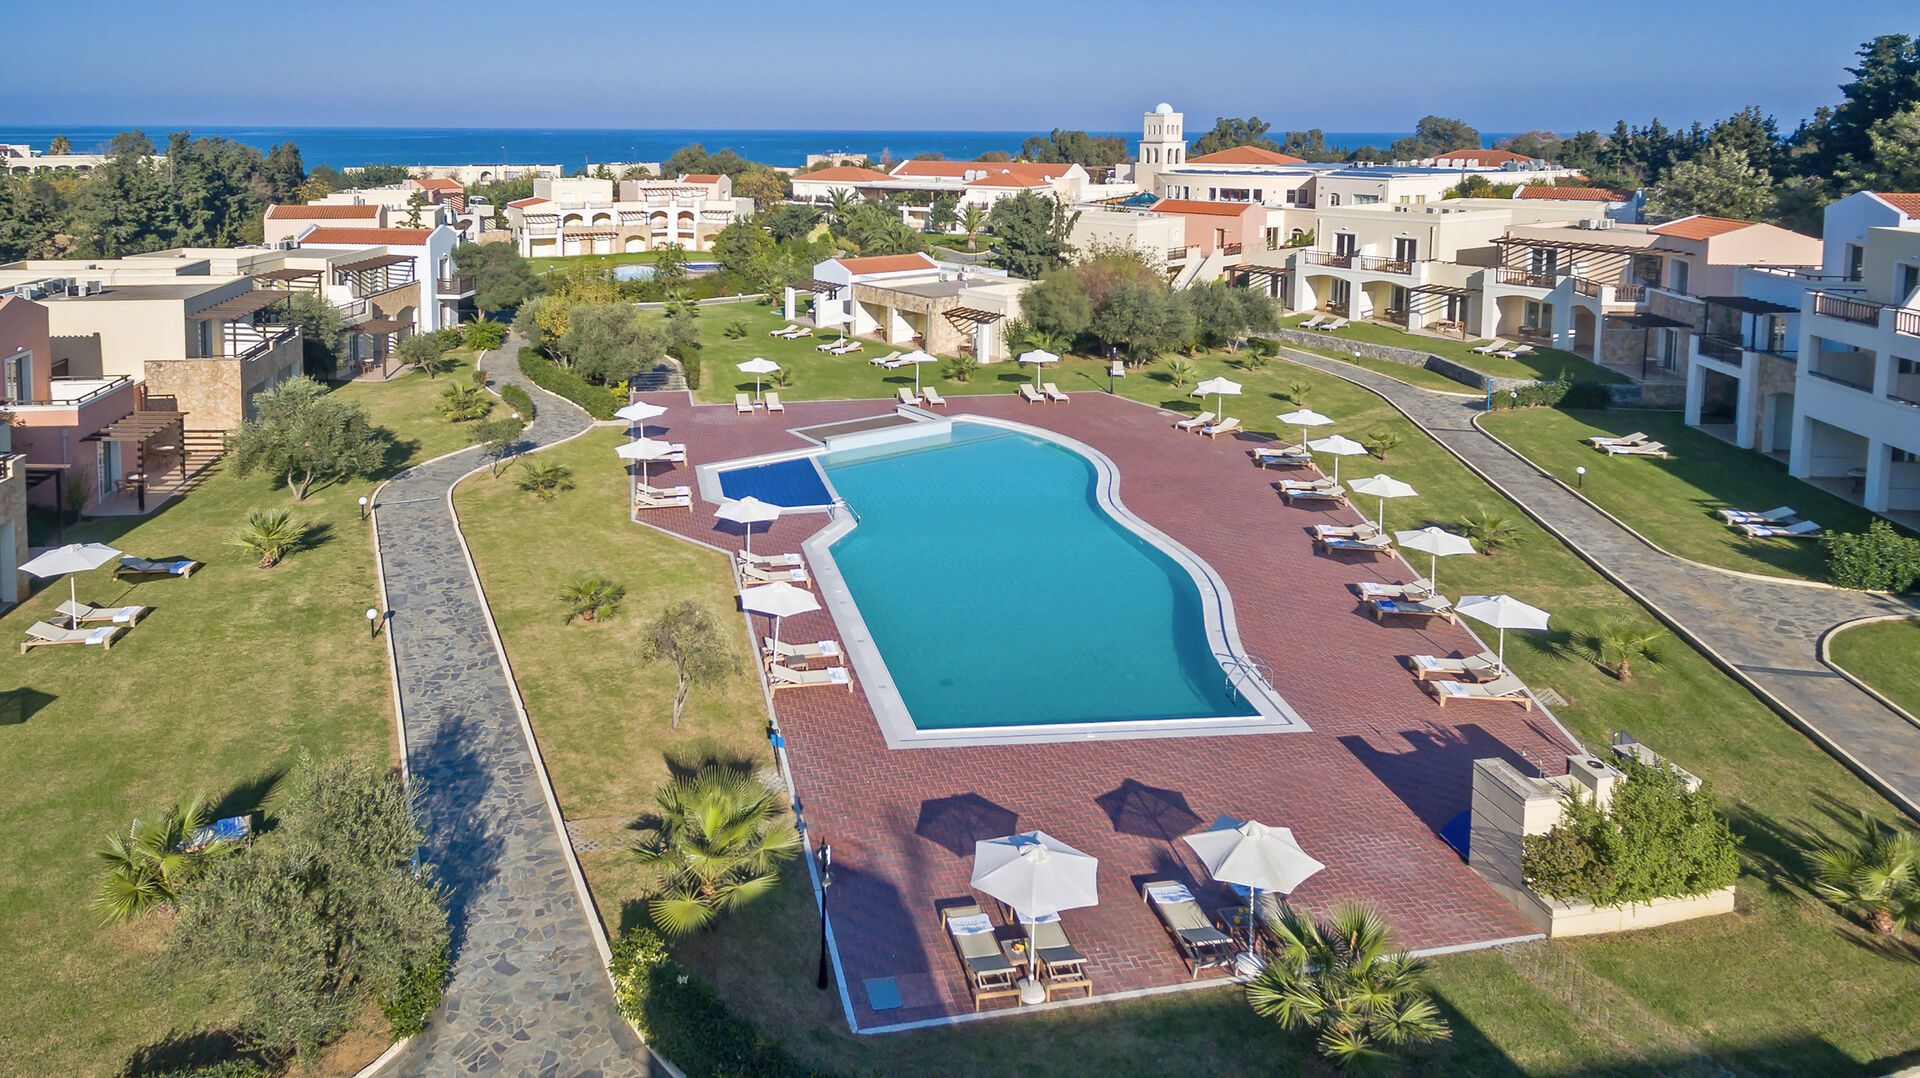 Crète - Georgioupolis - Grèce - Iles grecques - Hôtel Pilot Beach Resort 5*